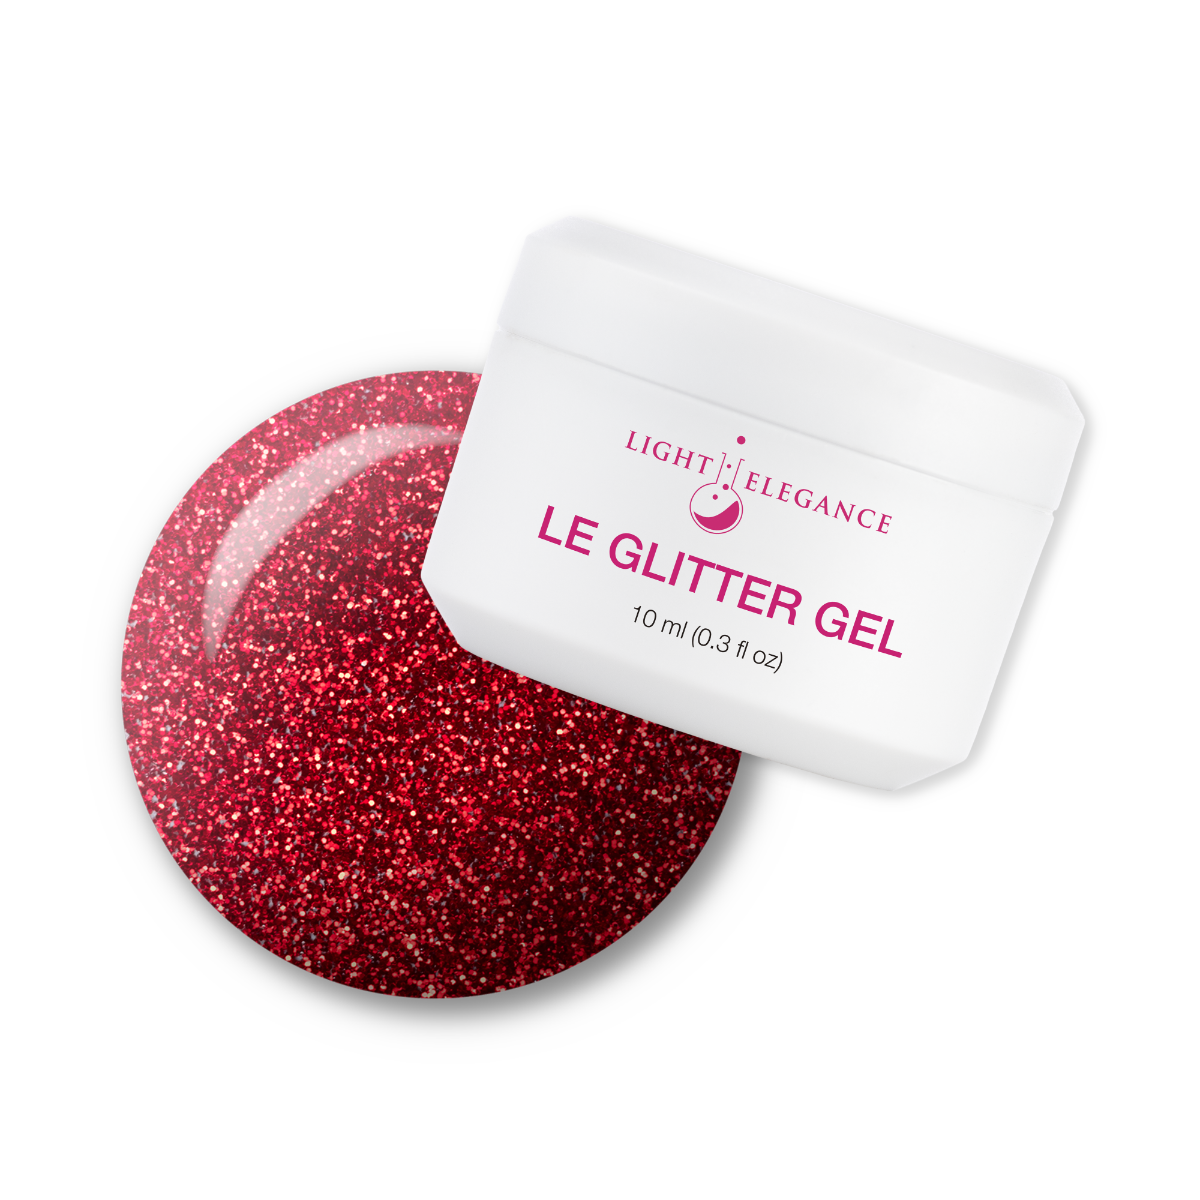 Light Elegance Glitter Gel - Be Mine :: New Packaging - Creata Beauty - Professional Beauty Products